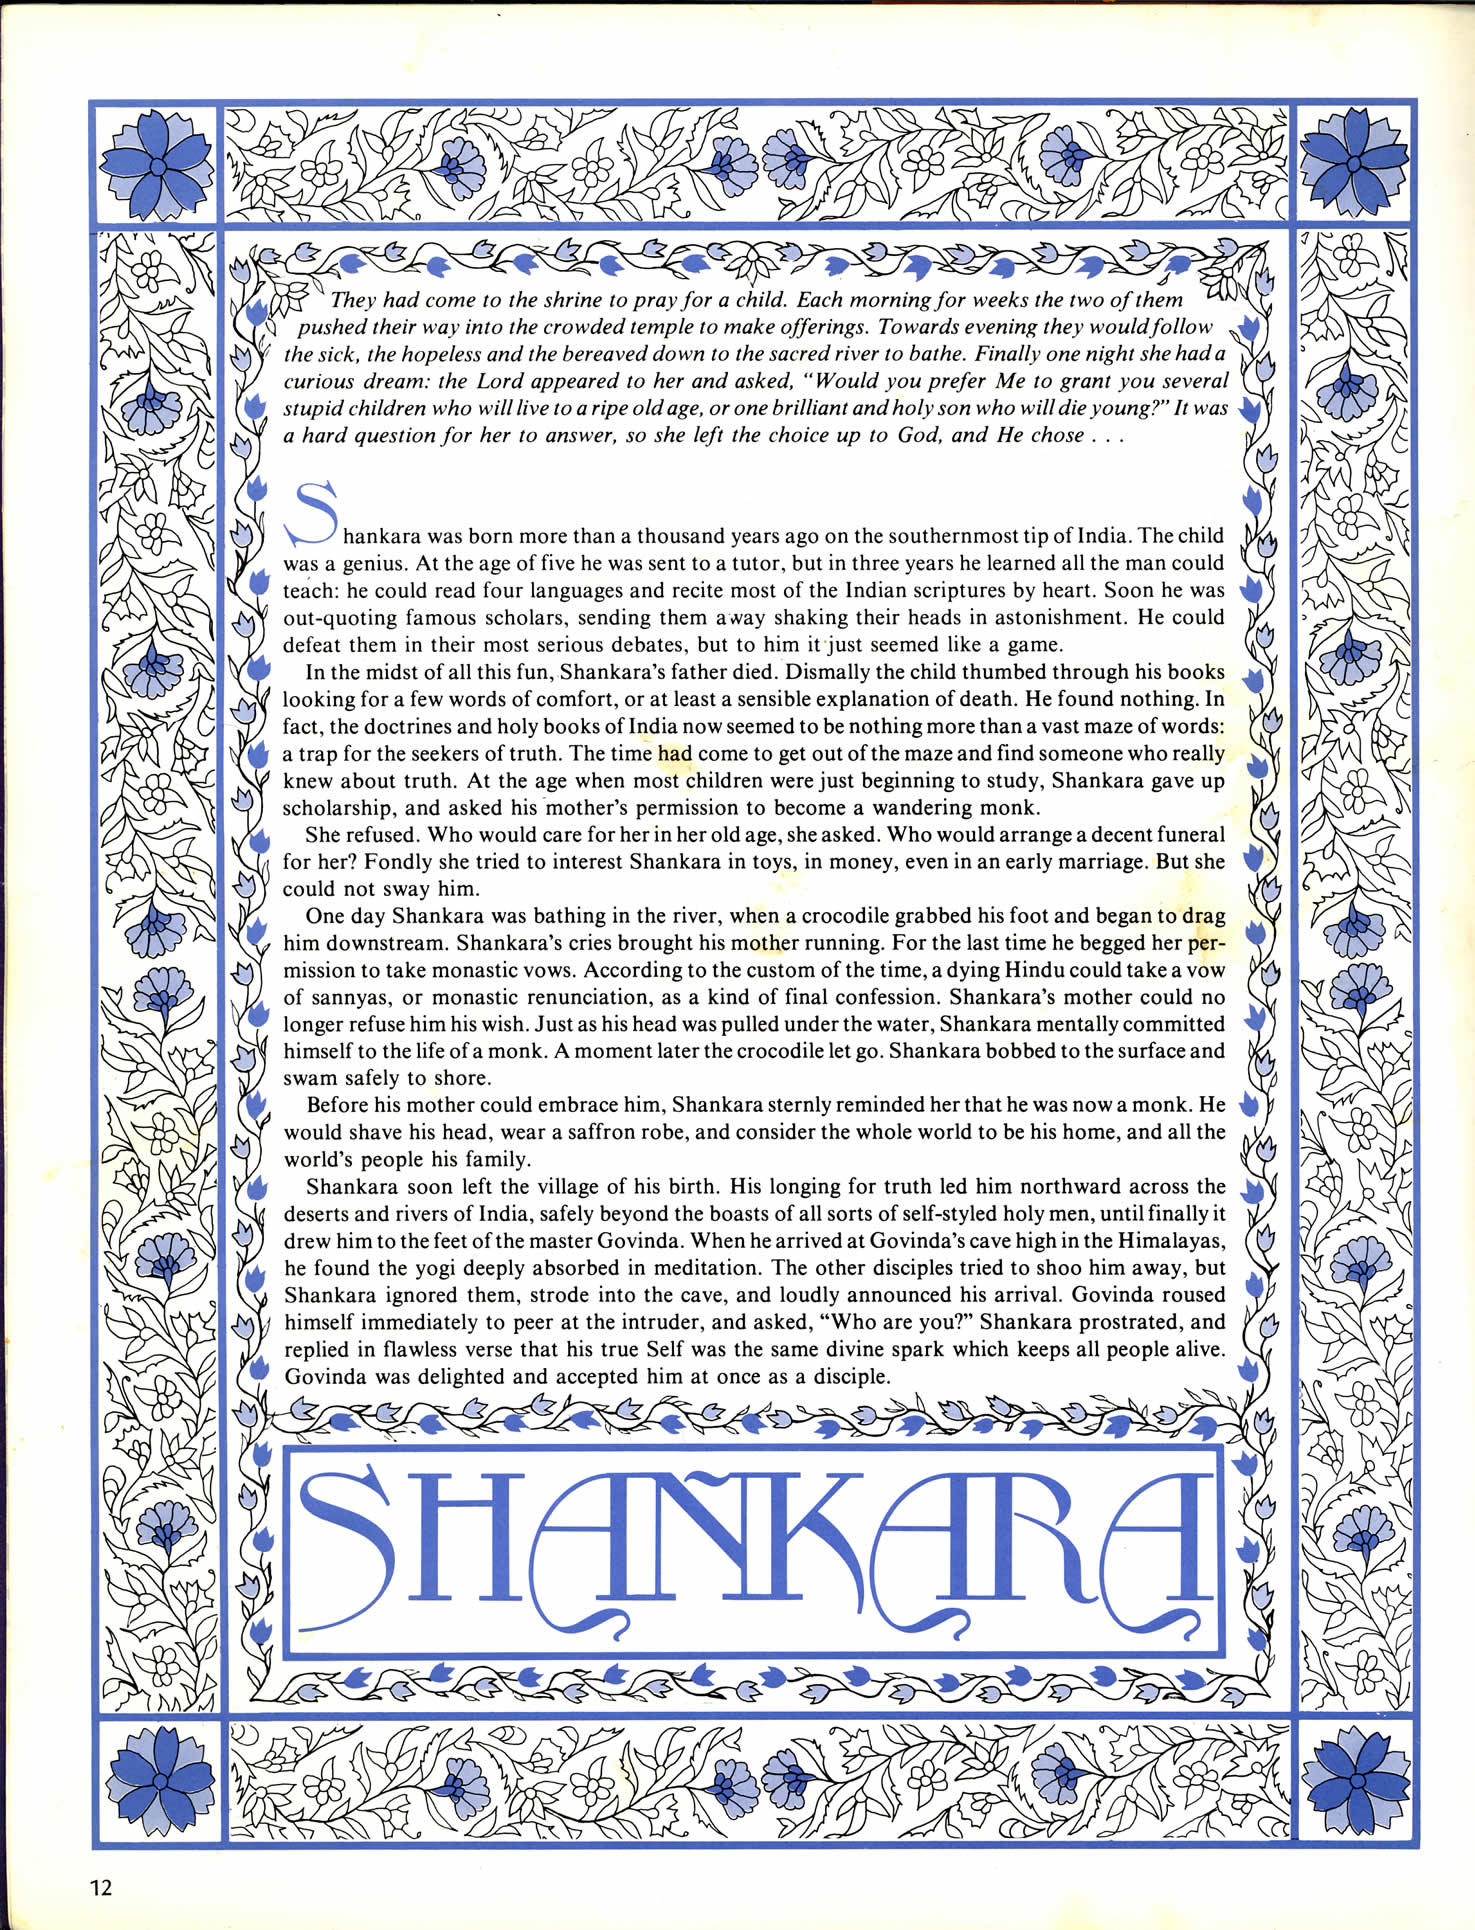 page12_article_shankara.jpg 619.3K